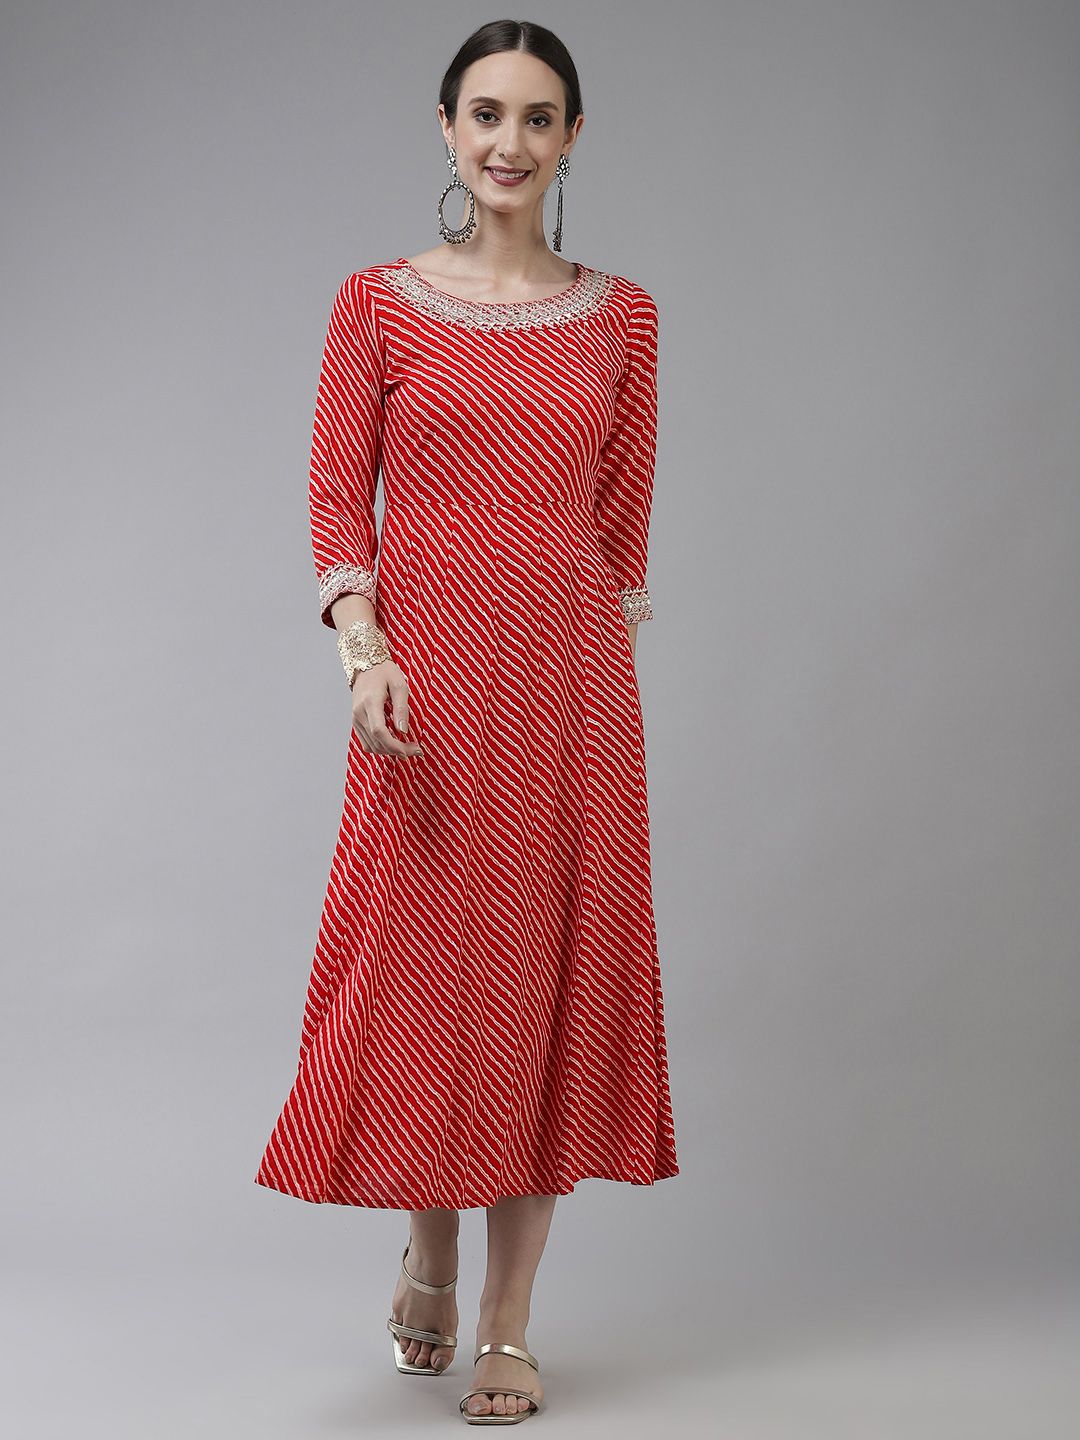 Yufta Red Ethnic A-Line Maxi Dress Price in India